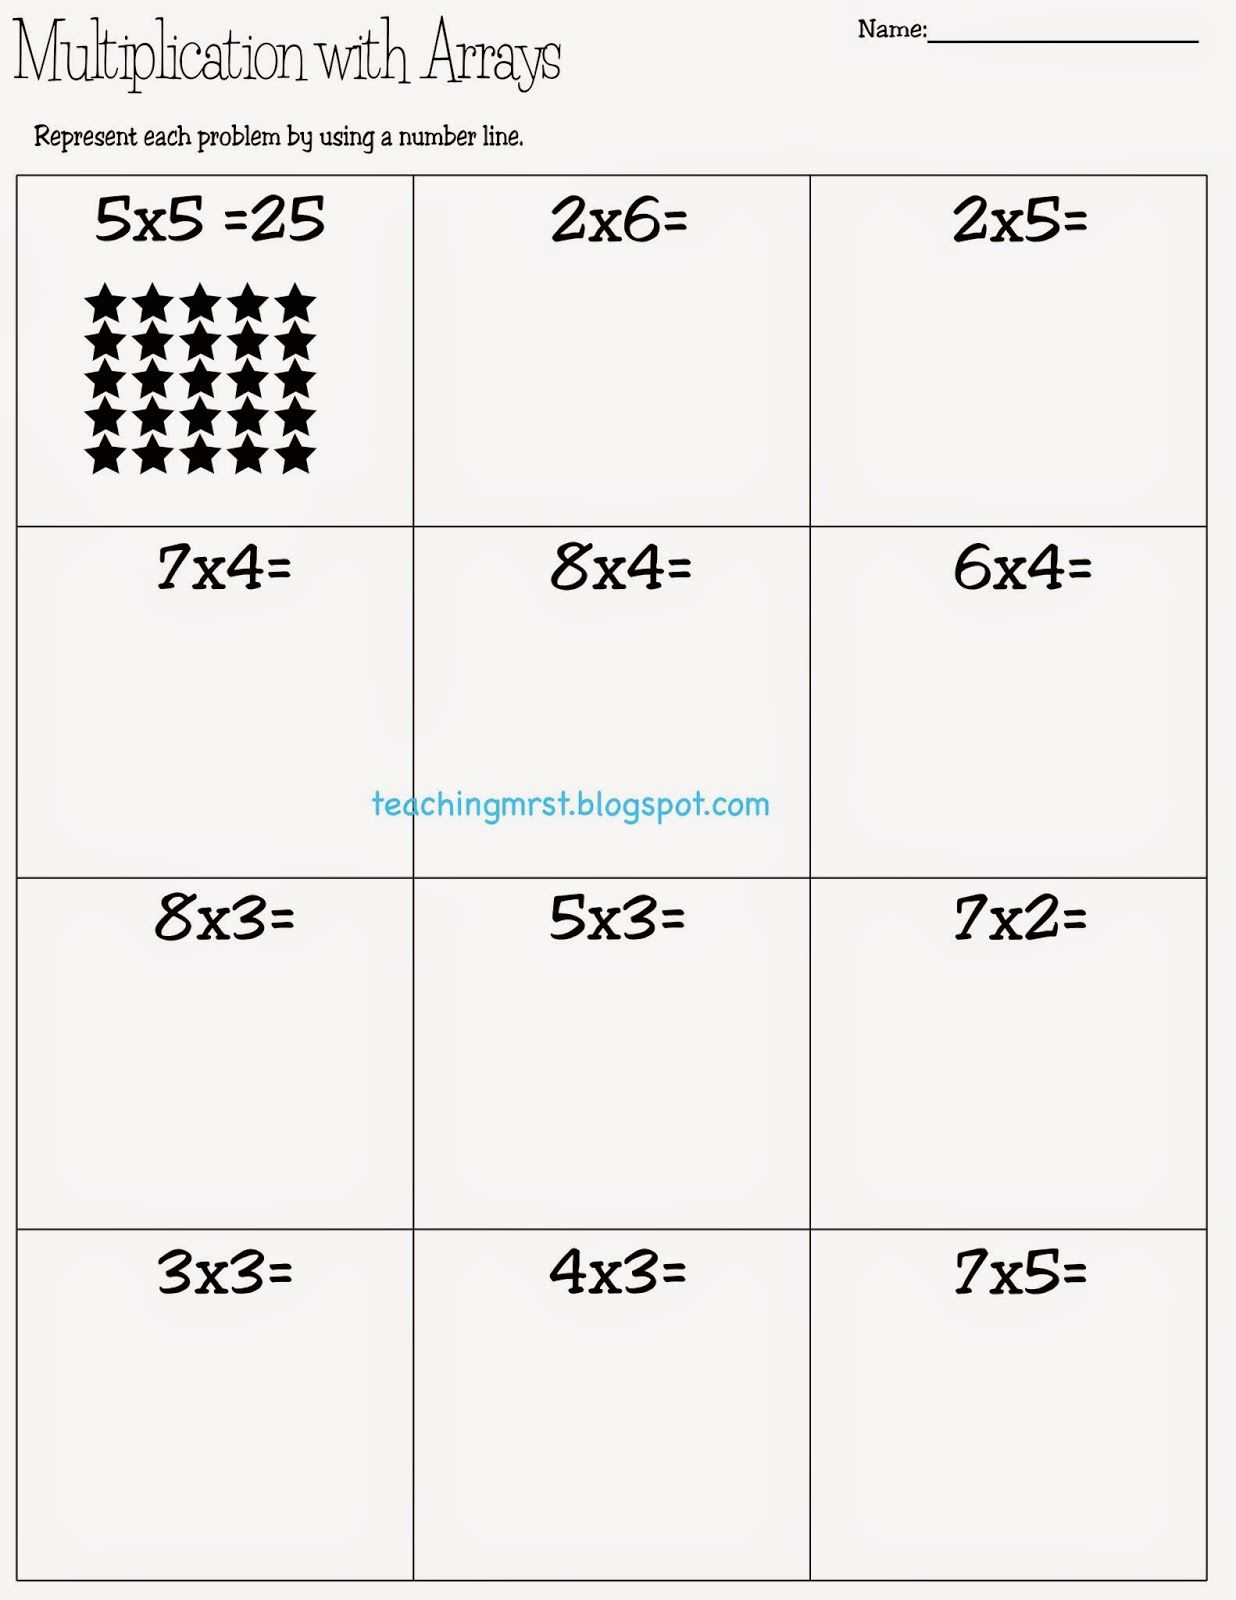 Drawing Multiplication Arrays Worksheet